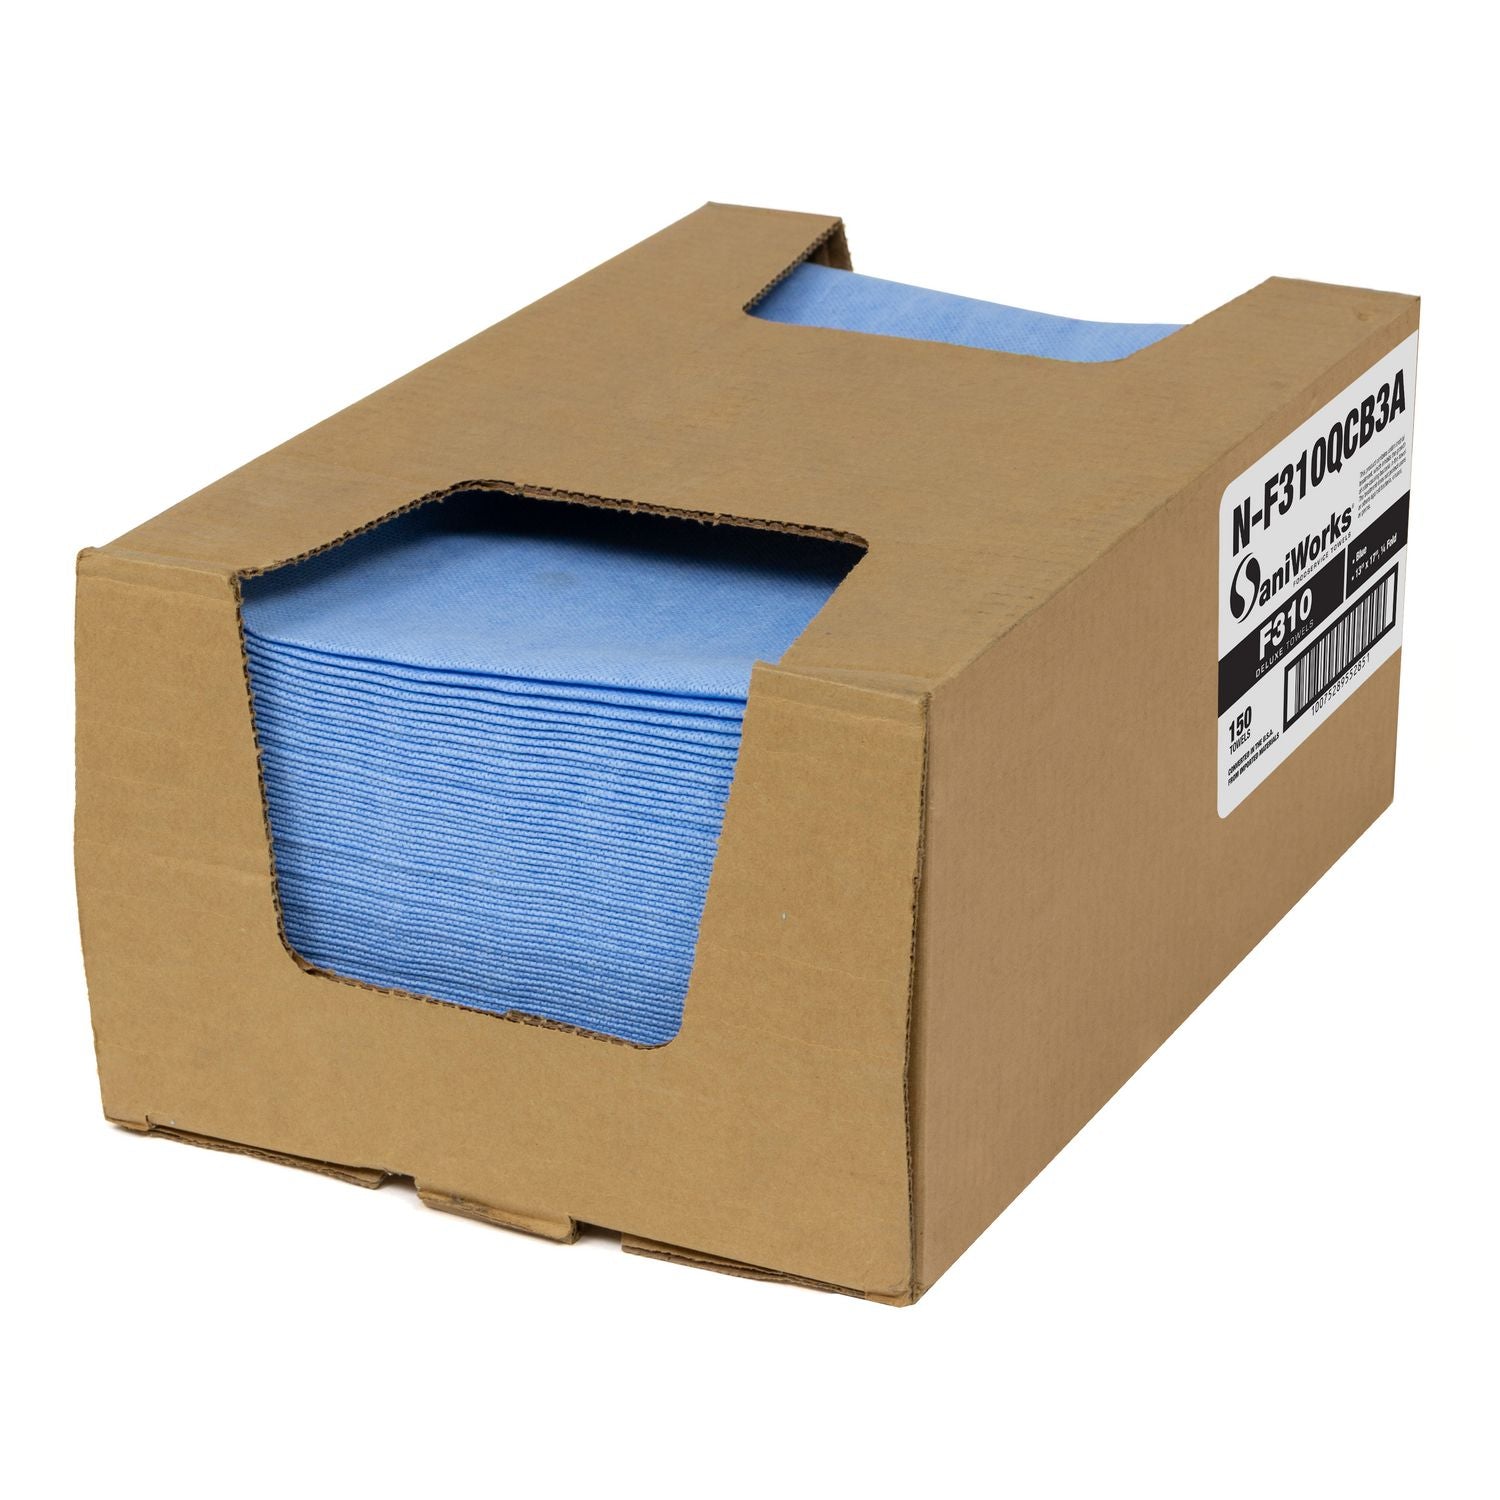 deluxe-foodservice-wiper-13-x-17-blue-150-carton_hosnf310qcb3a - 1